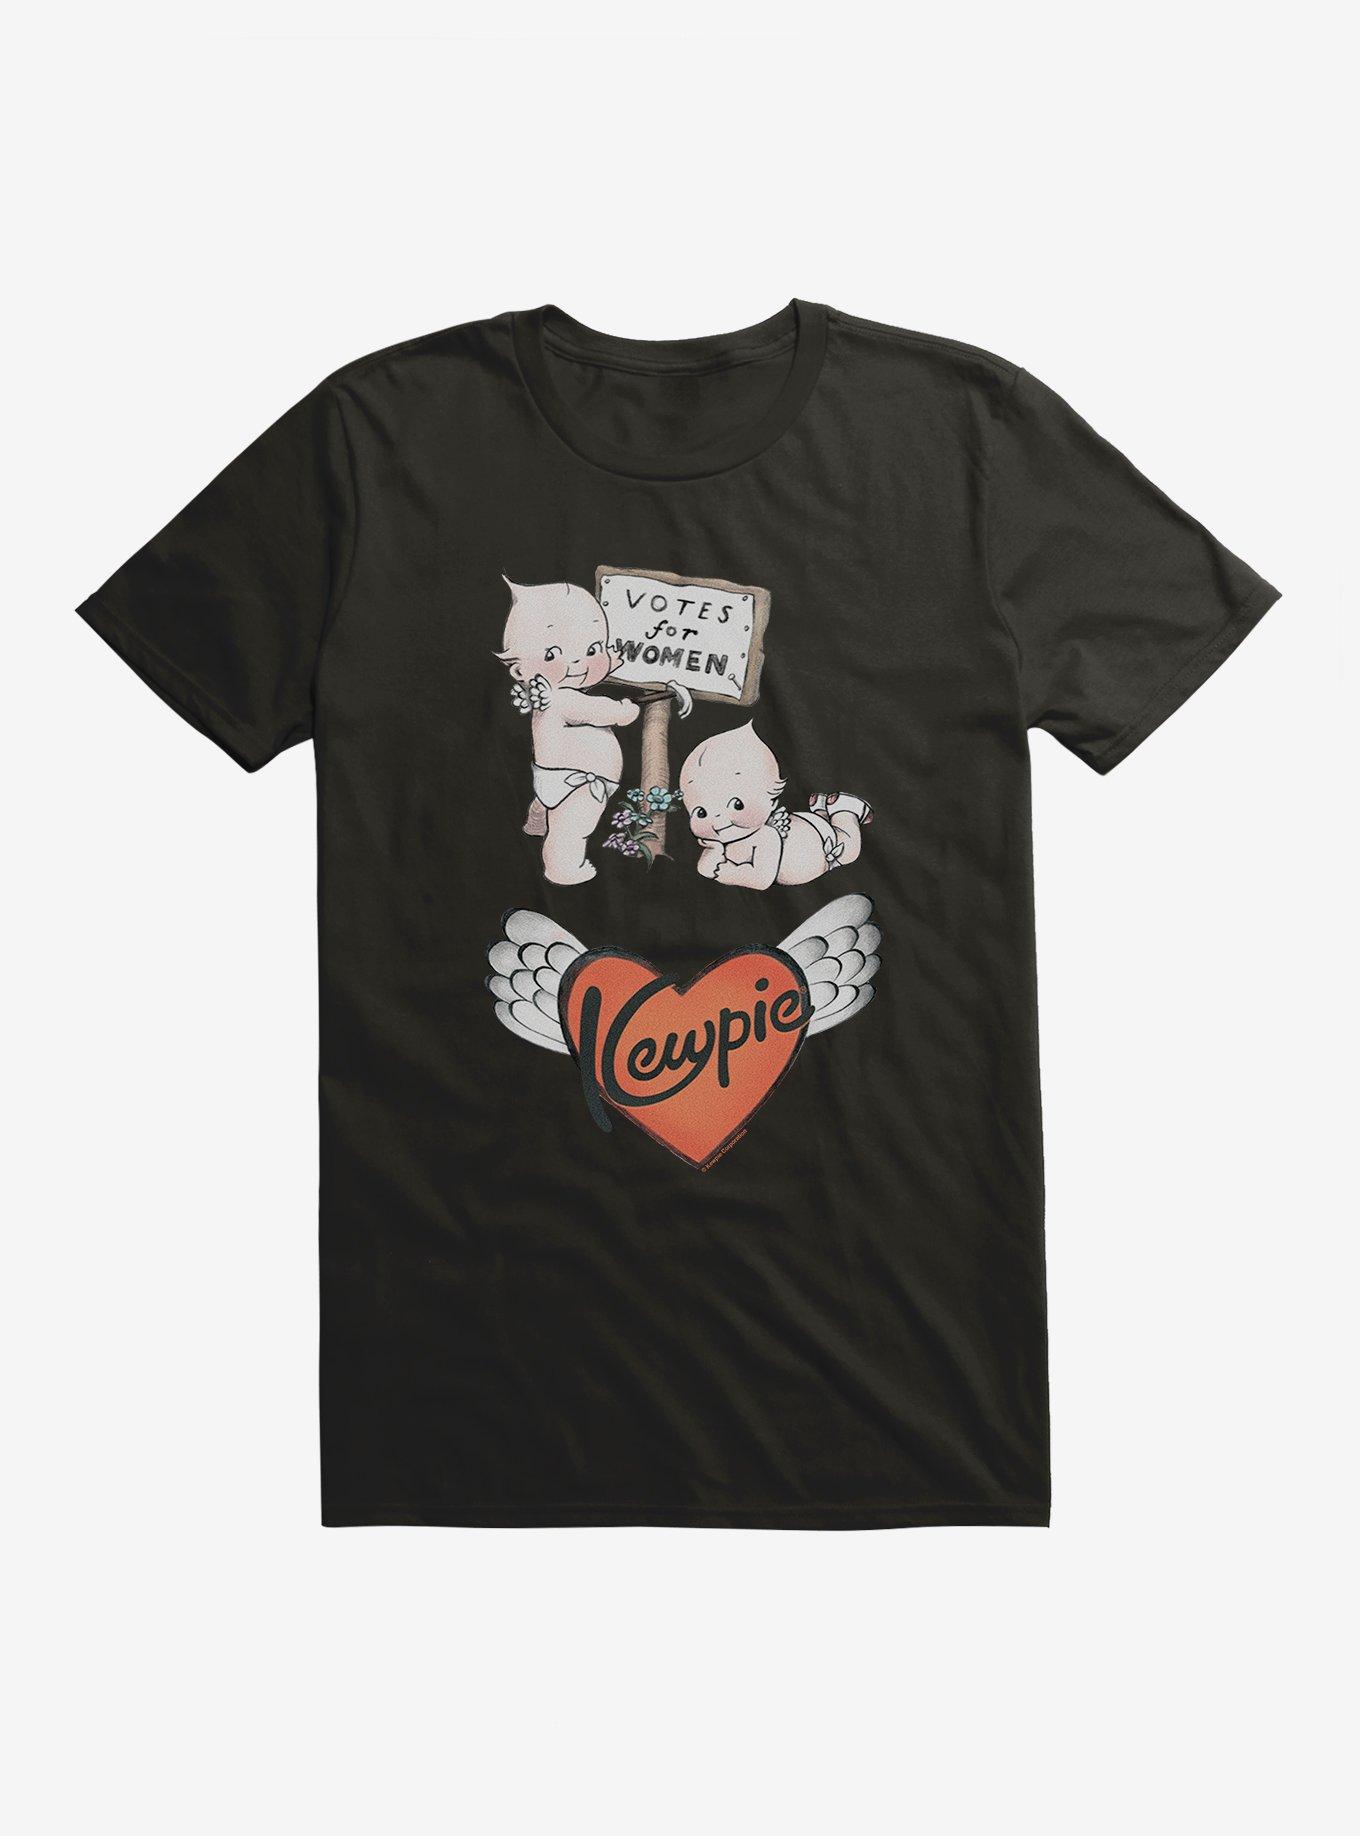 Kewpie Heart Logo T-Shirt